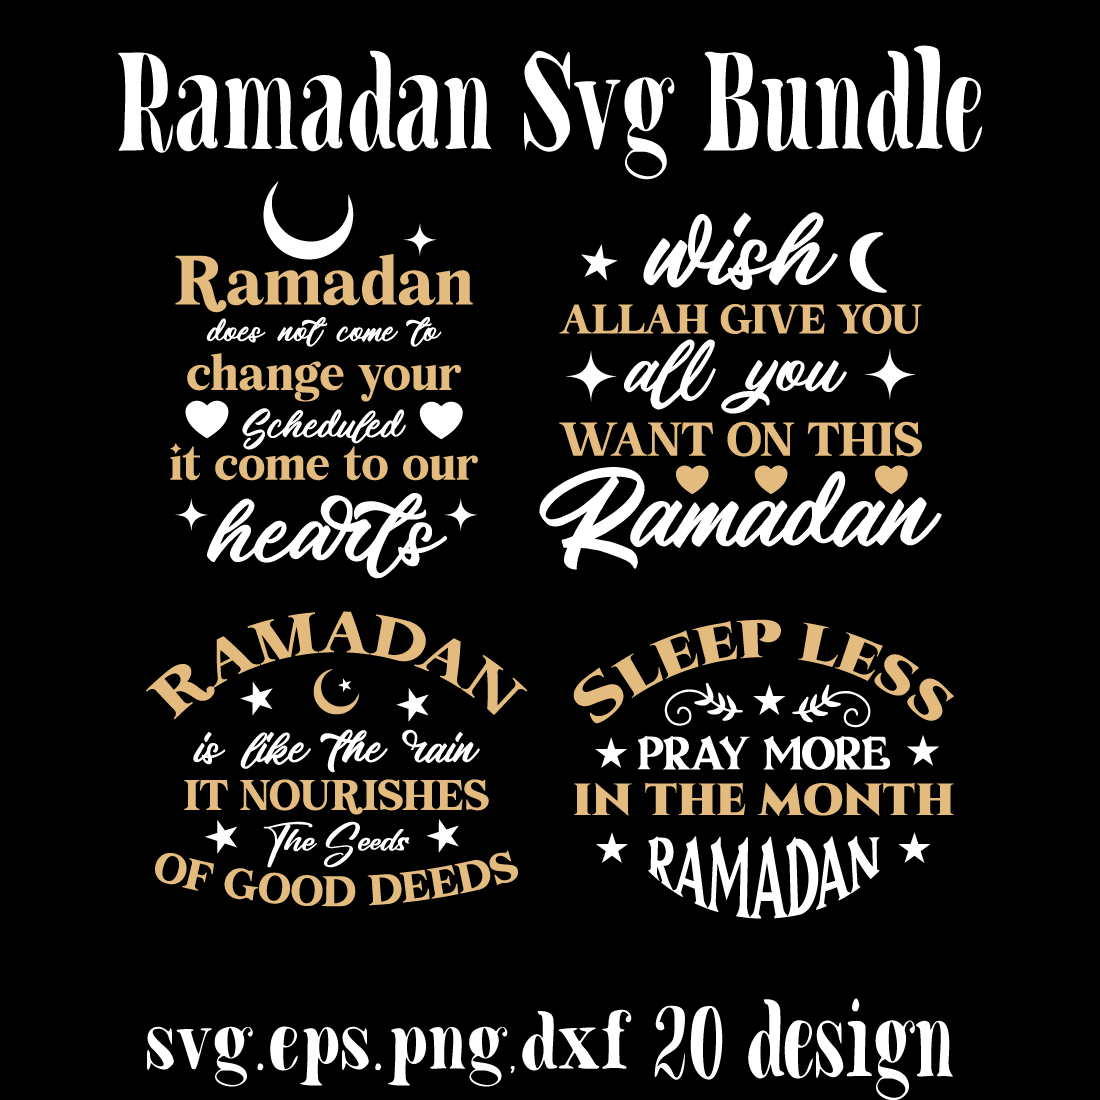 Ramadan svg bundle cover image.